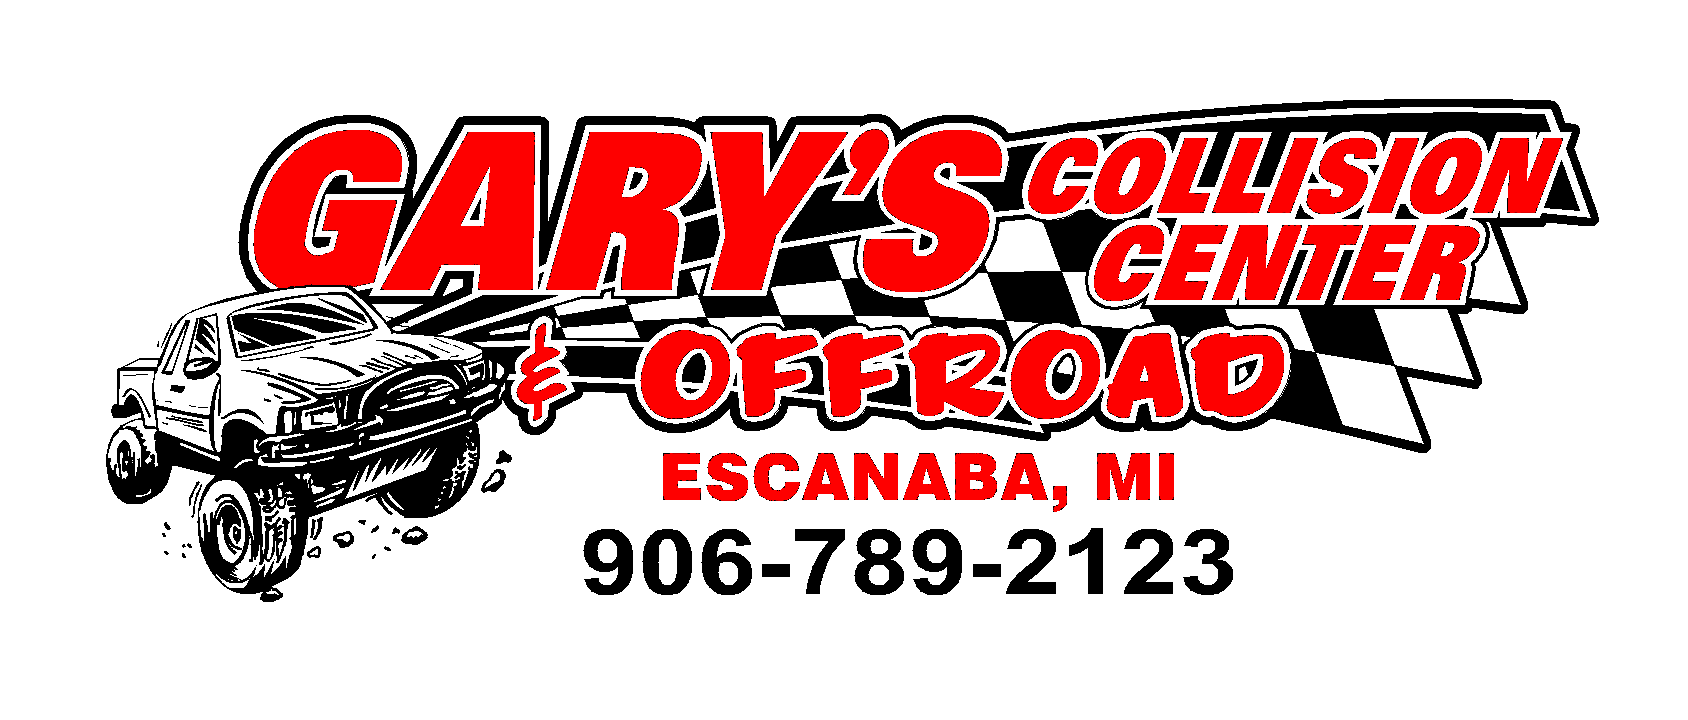 Gary's Collision Center & Offroad | Logo